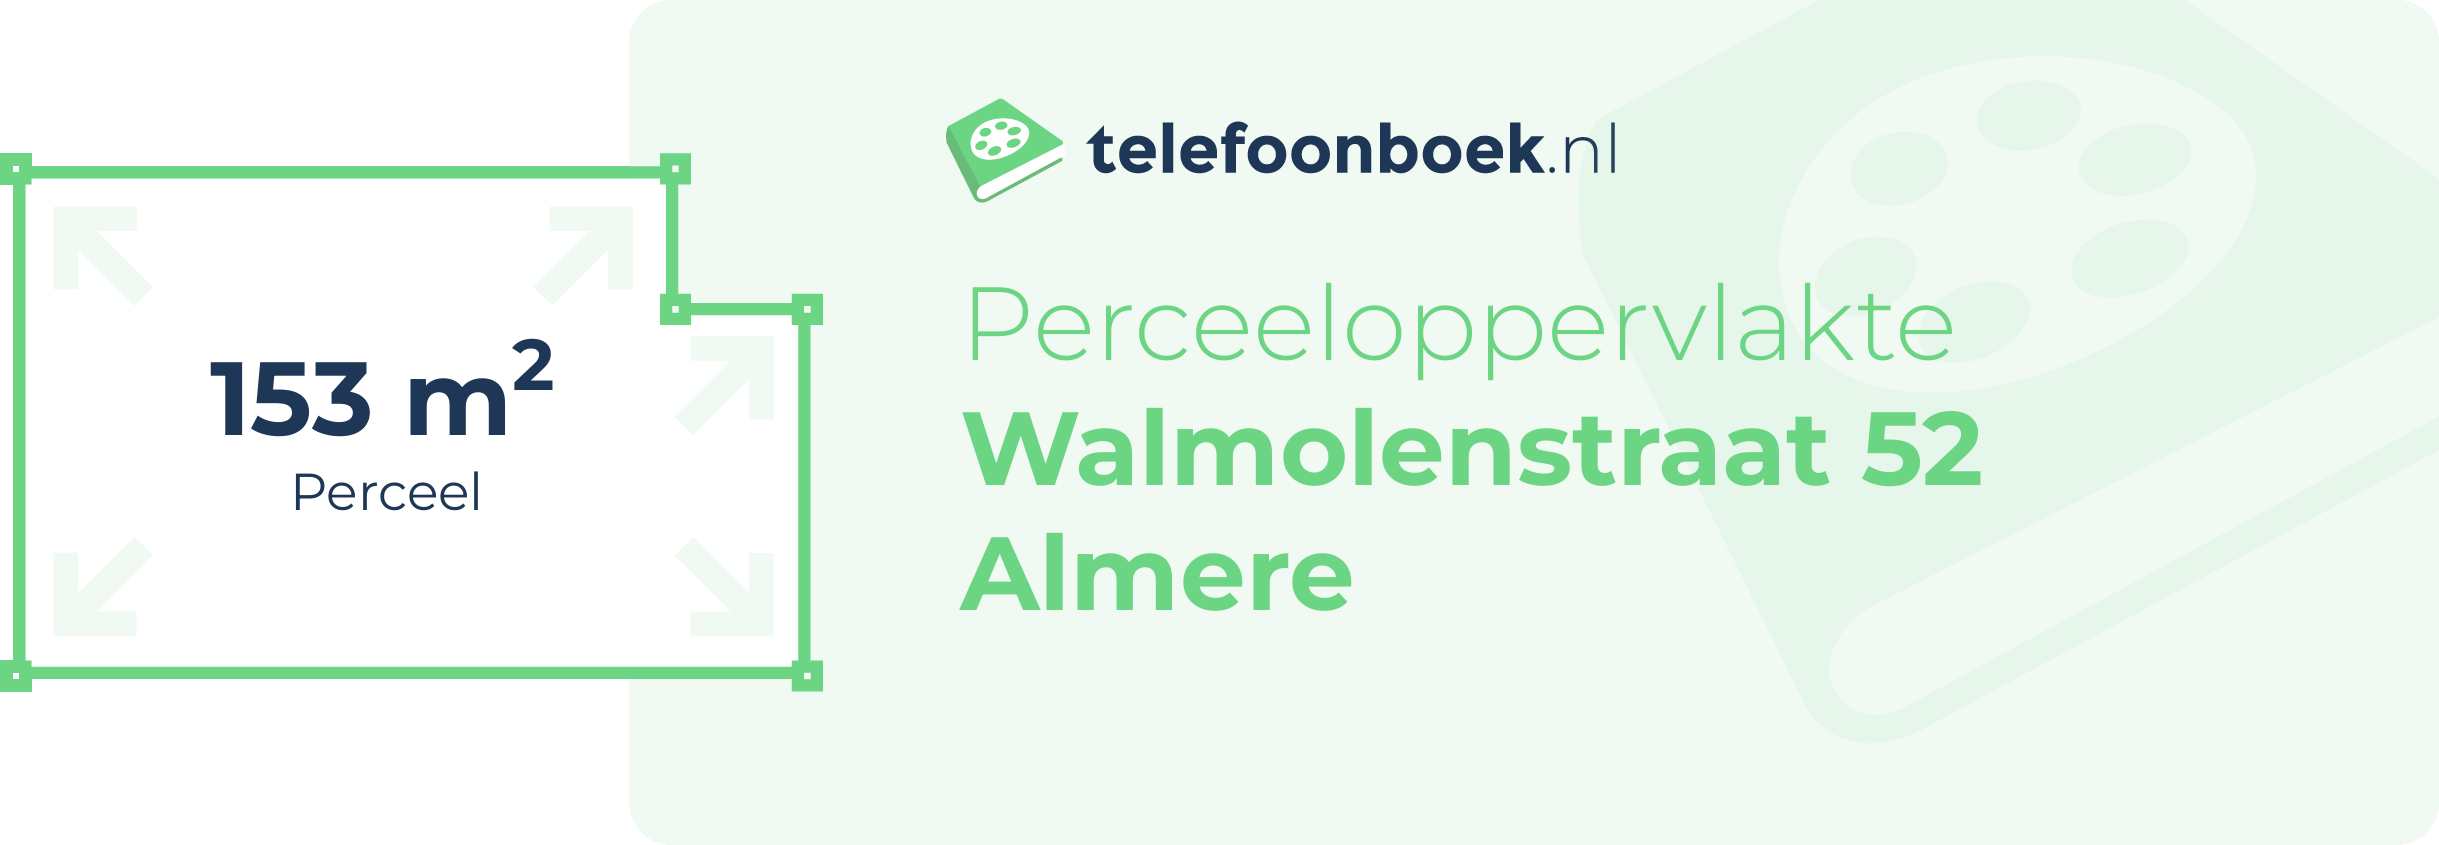 Perceeloppervlakte Walmolenstraat 52 Almere